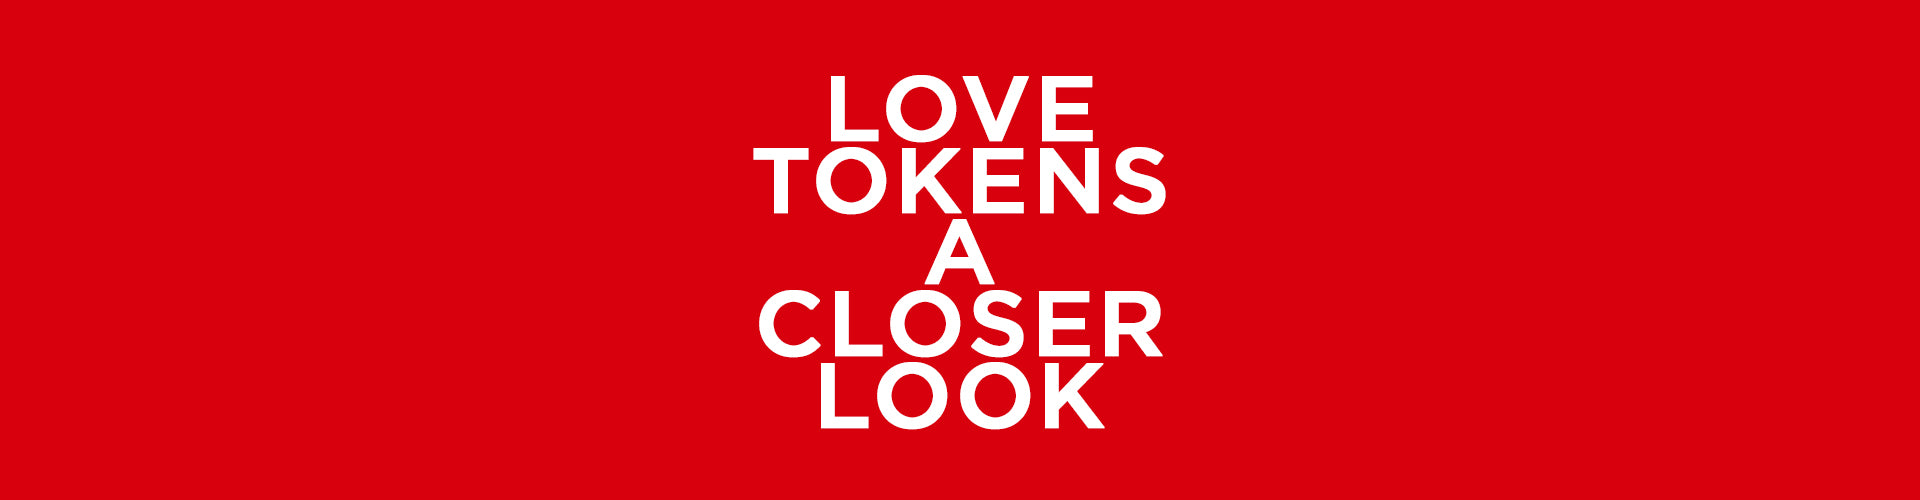 Love Tokens: A Closer Look